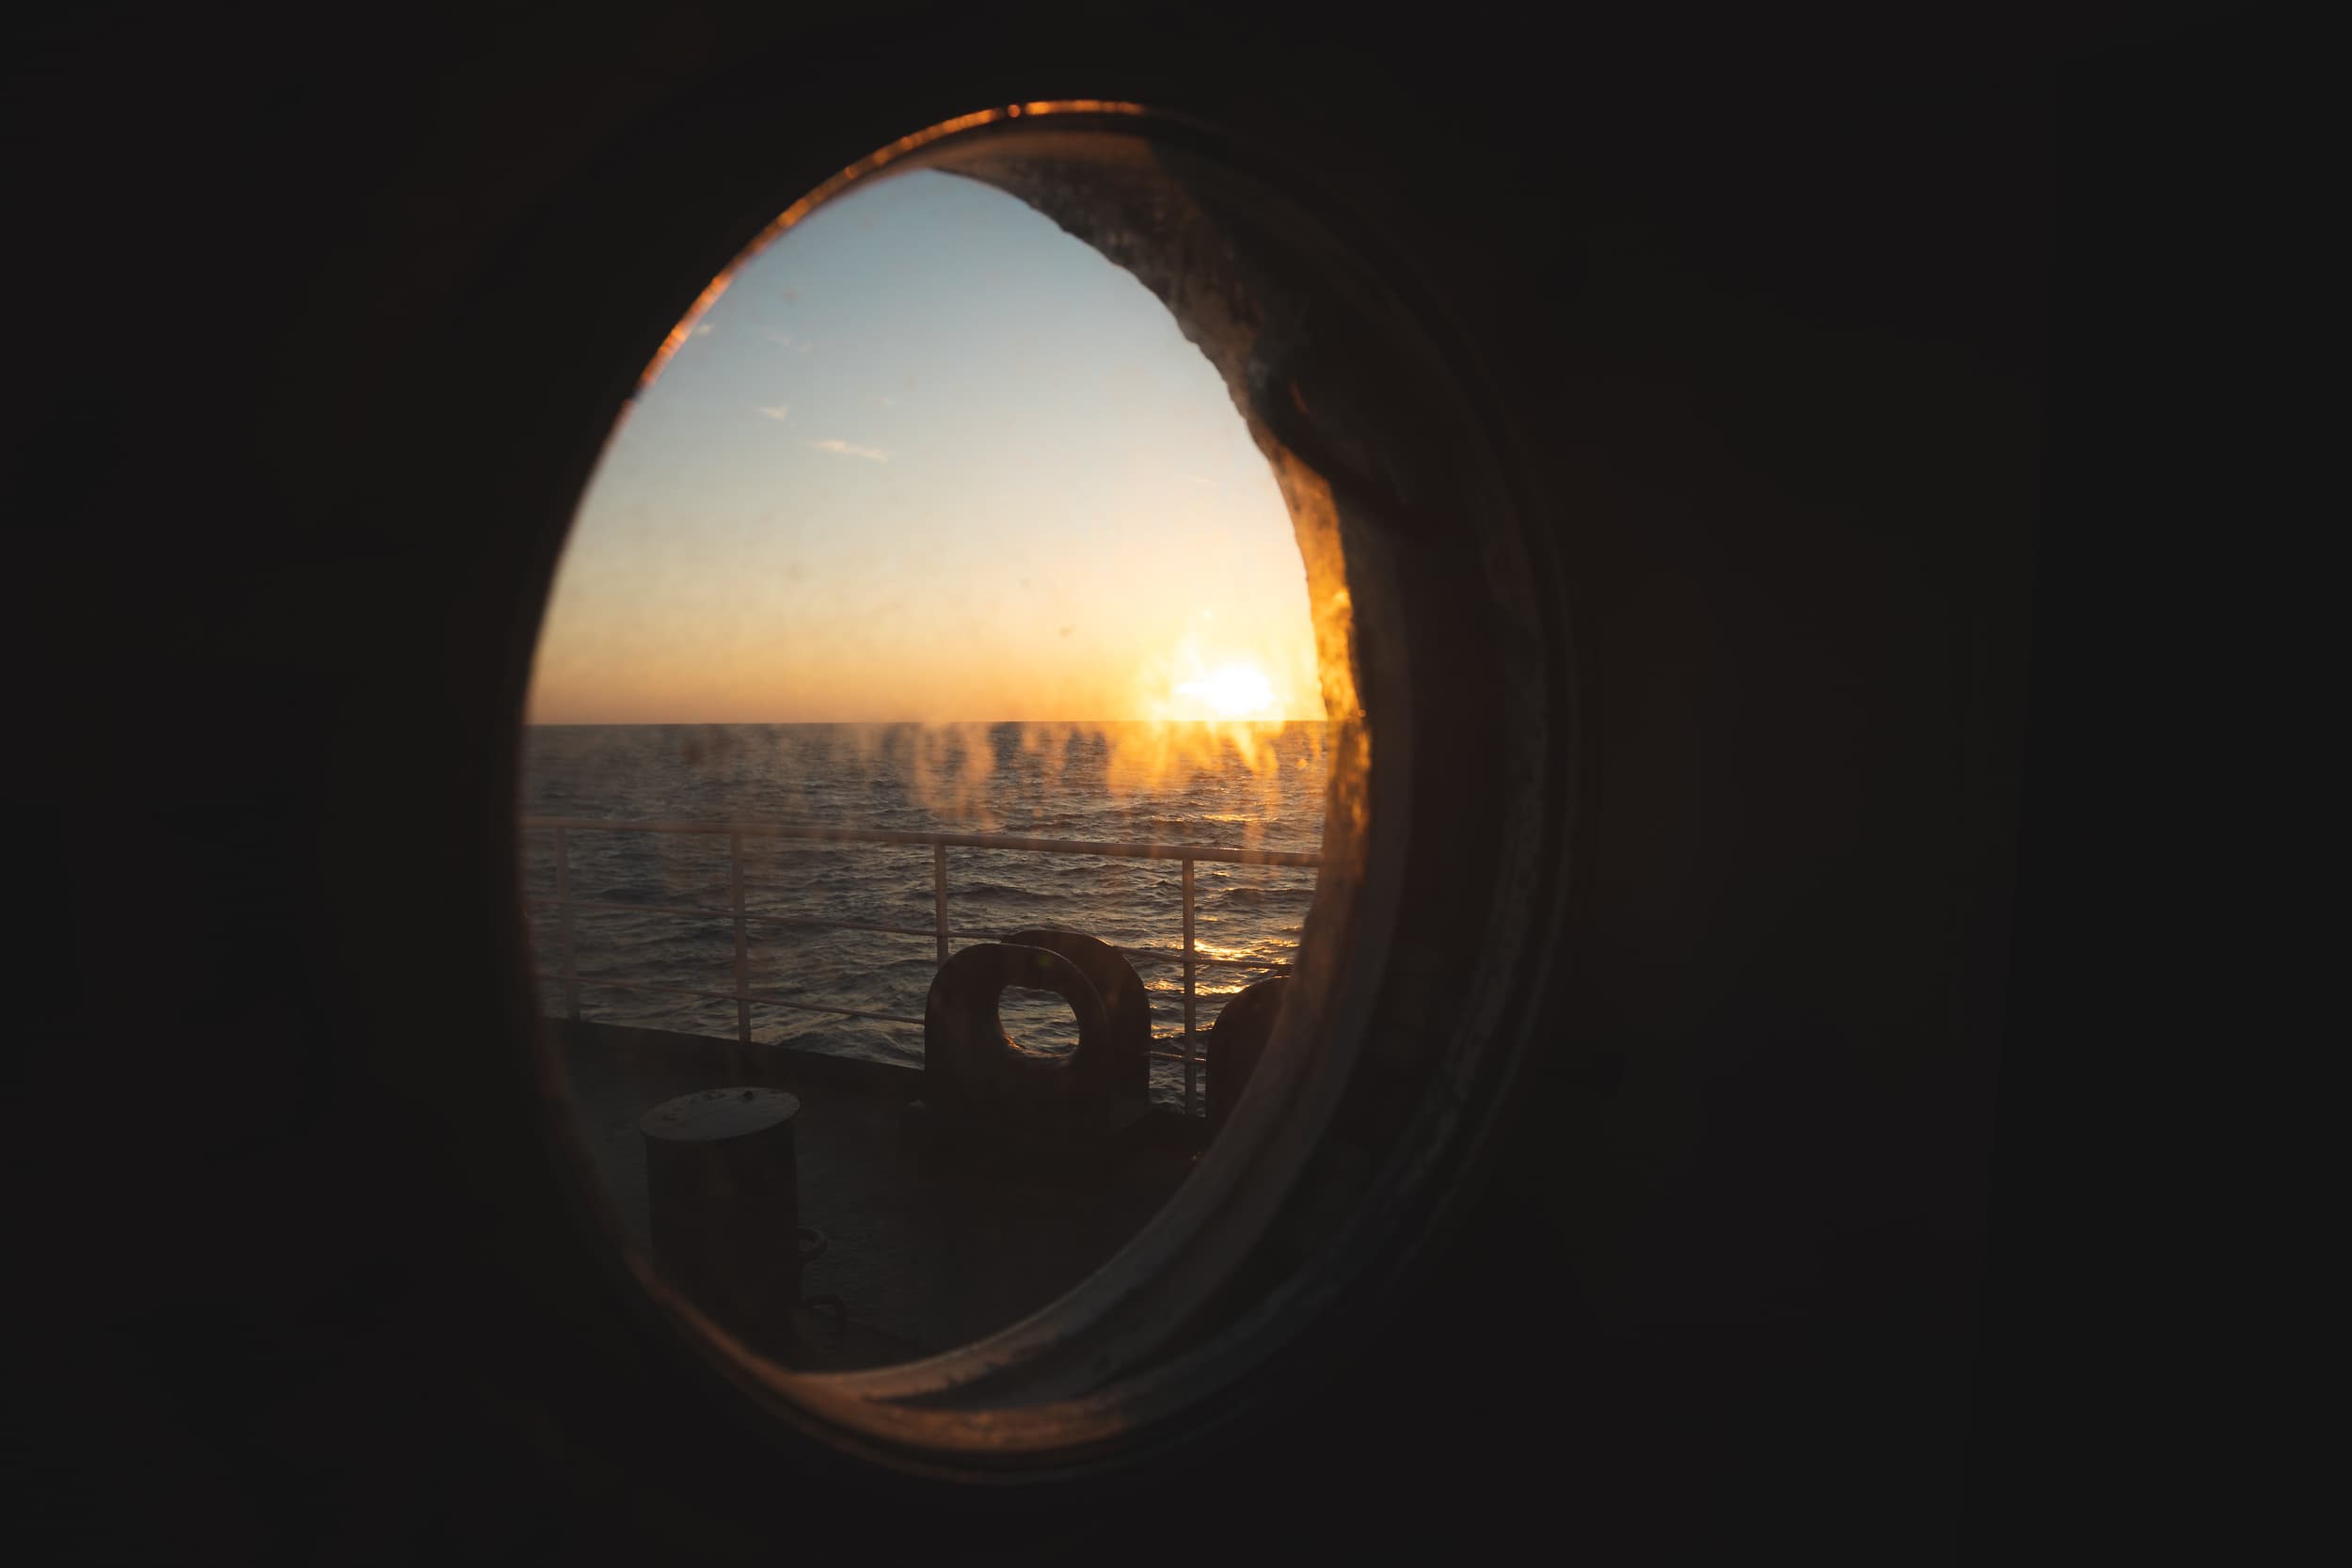 Sunrise through the ferry Window